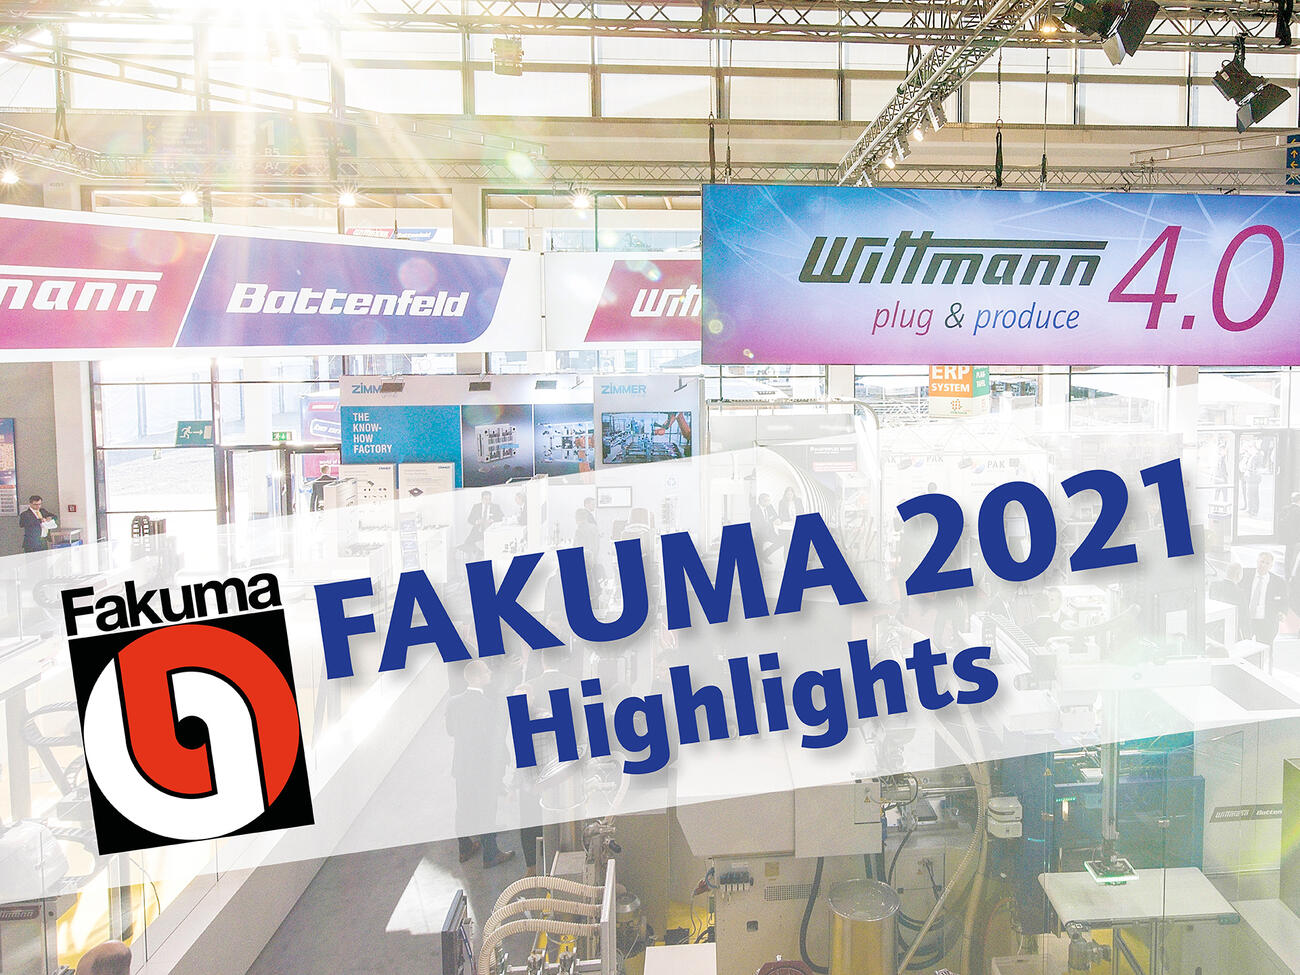 FAKUMA 2021 Highlights